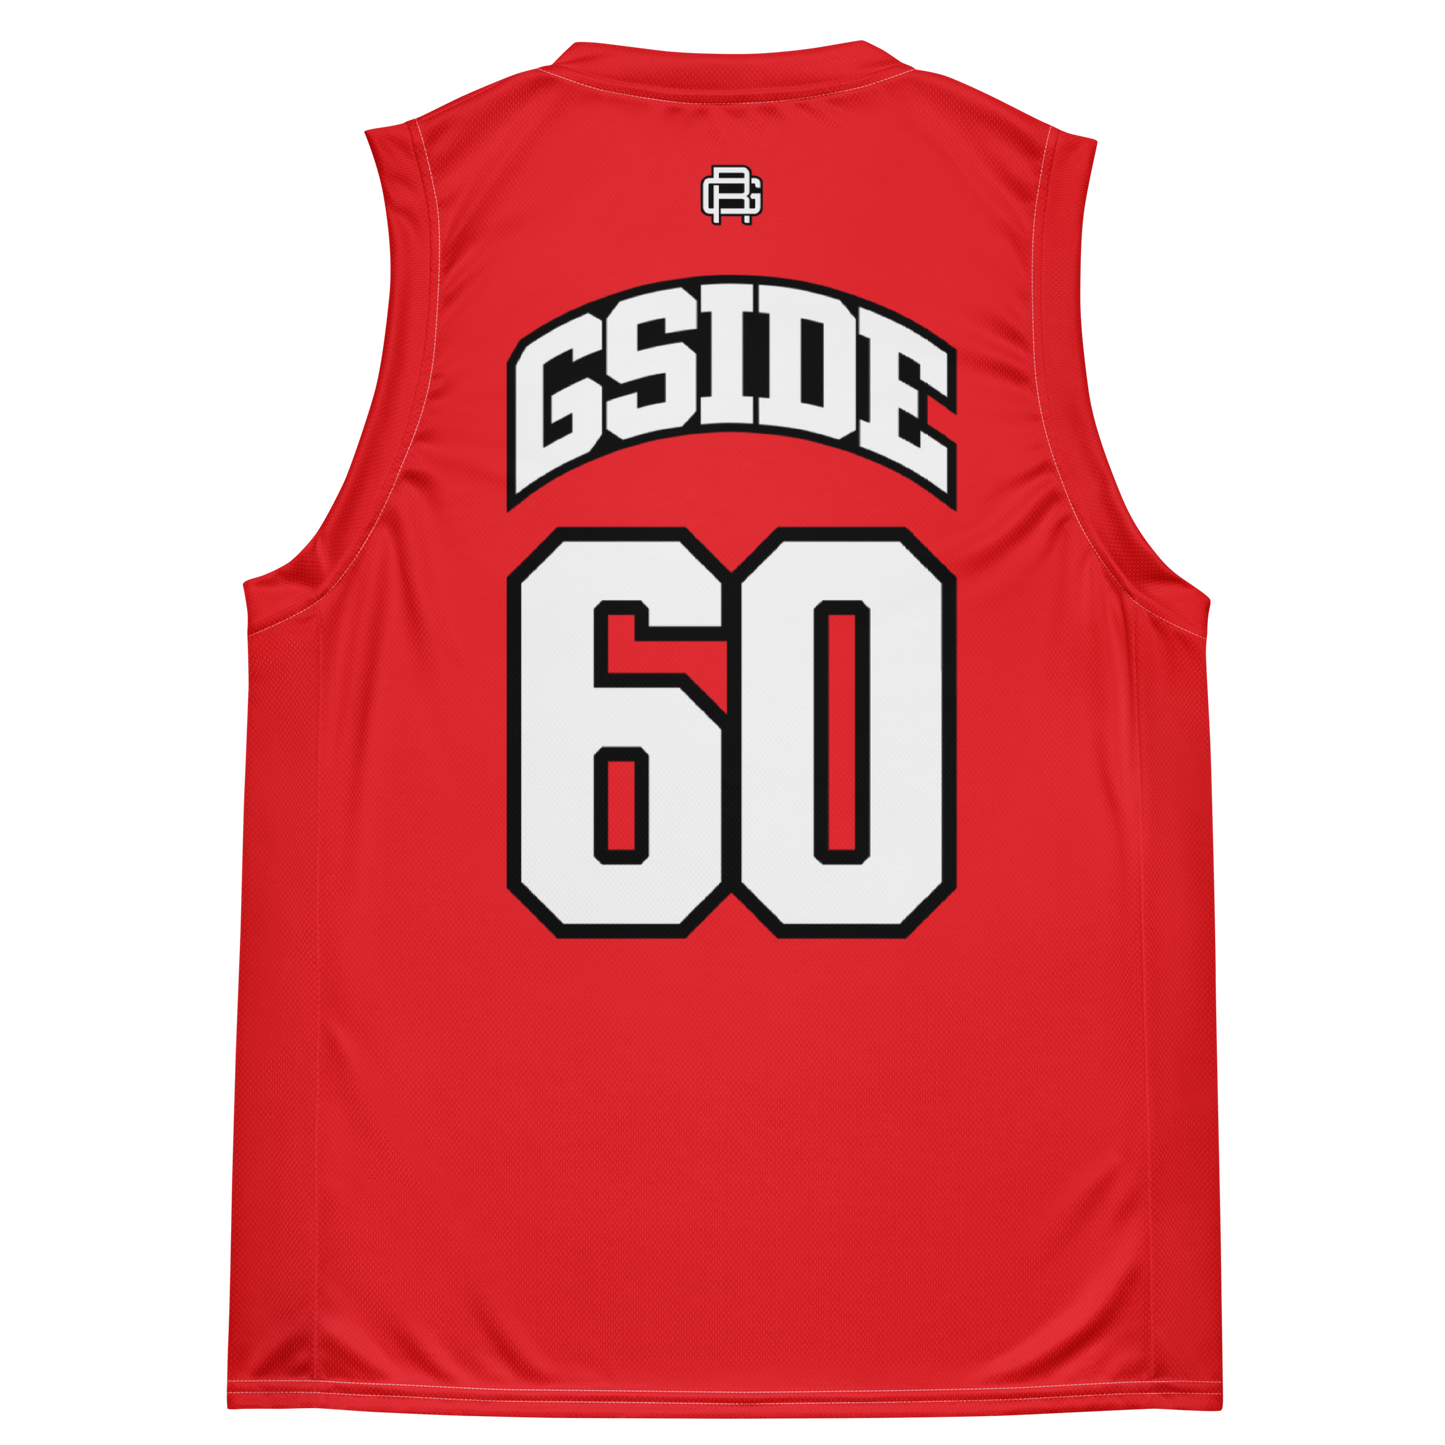 Gside Basketball Jersey - Sunset Red